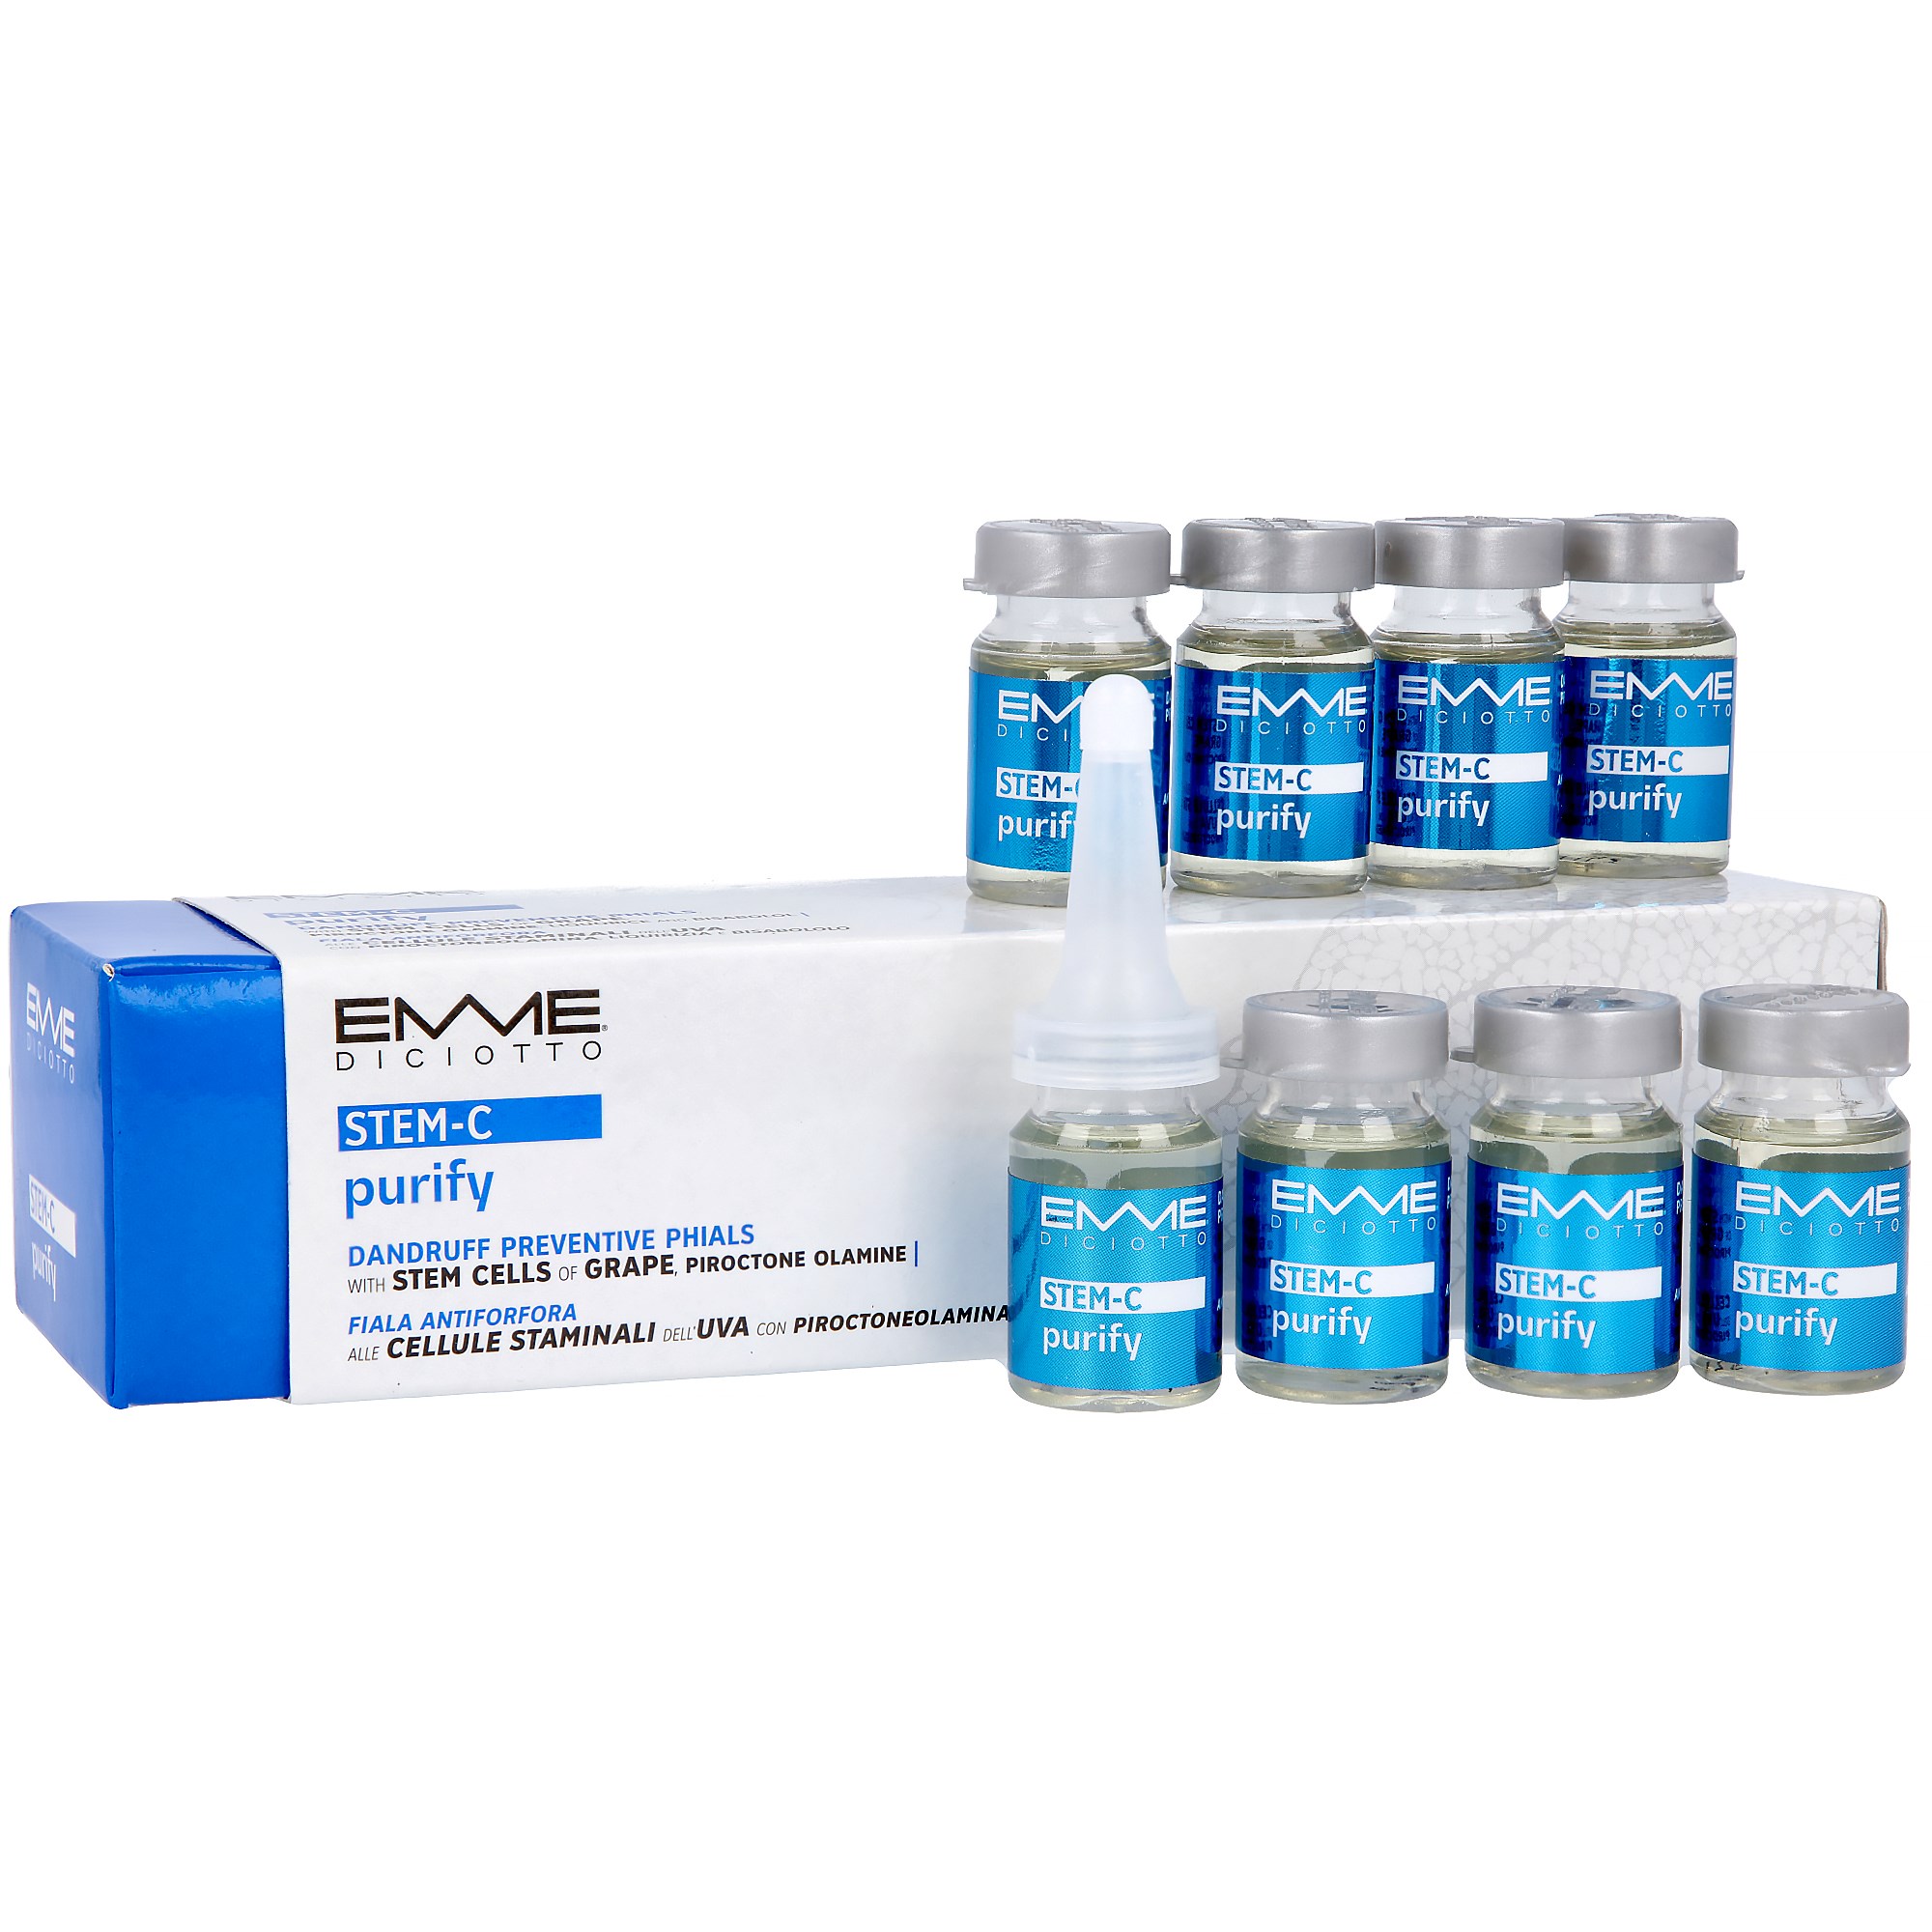 Emmediciotto STEM-C Purify Dandruff Preventive Phials 8 pack 80 m